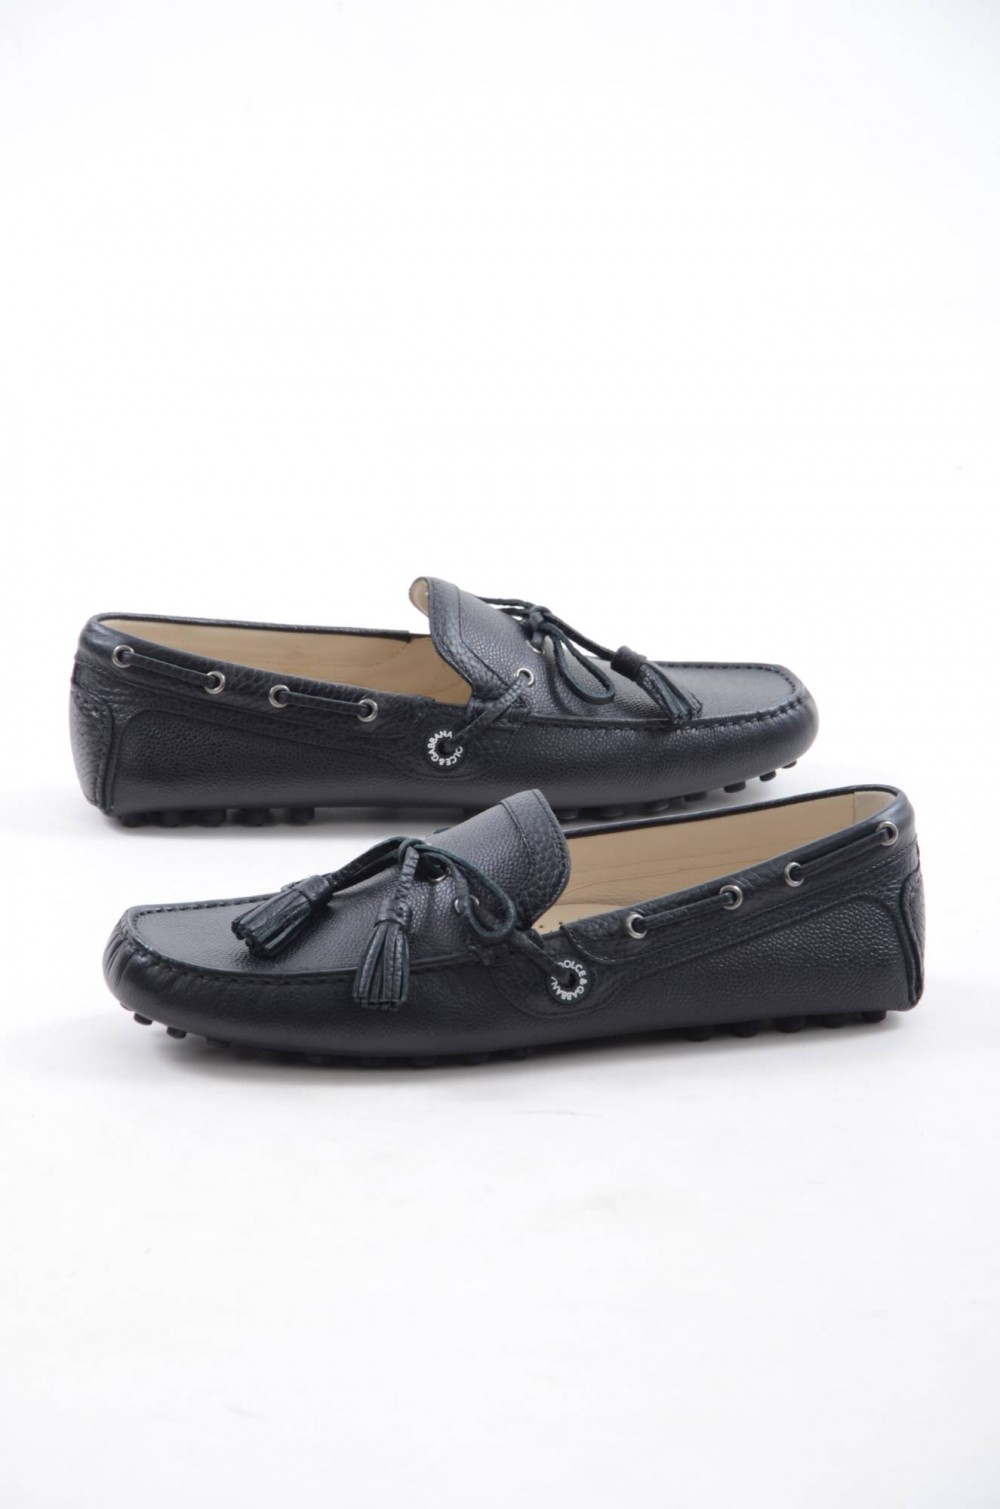 d&g loafer shoes